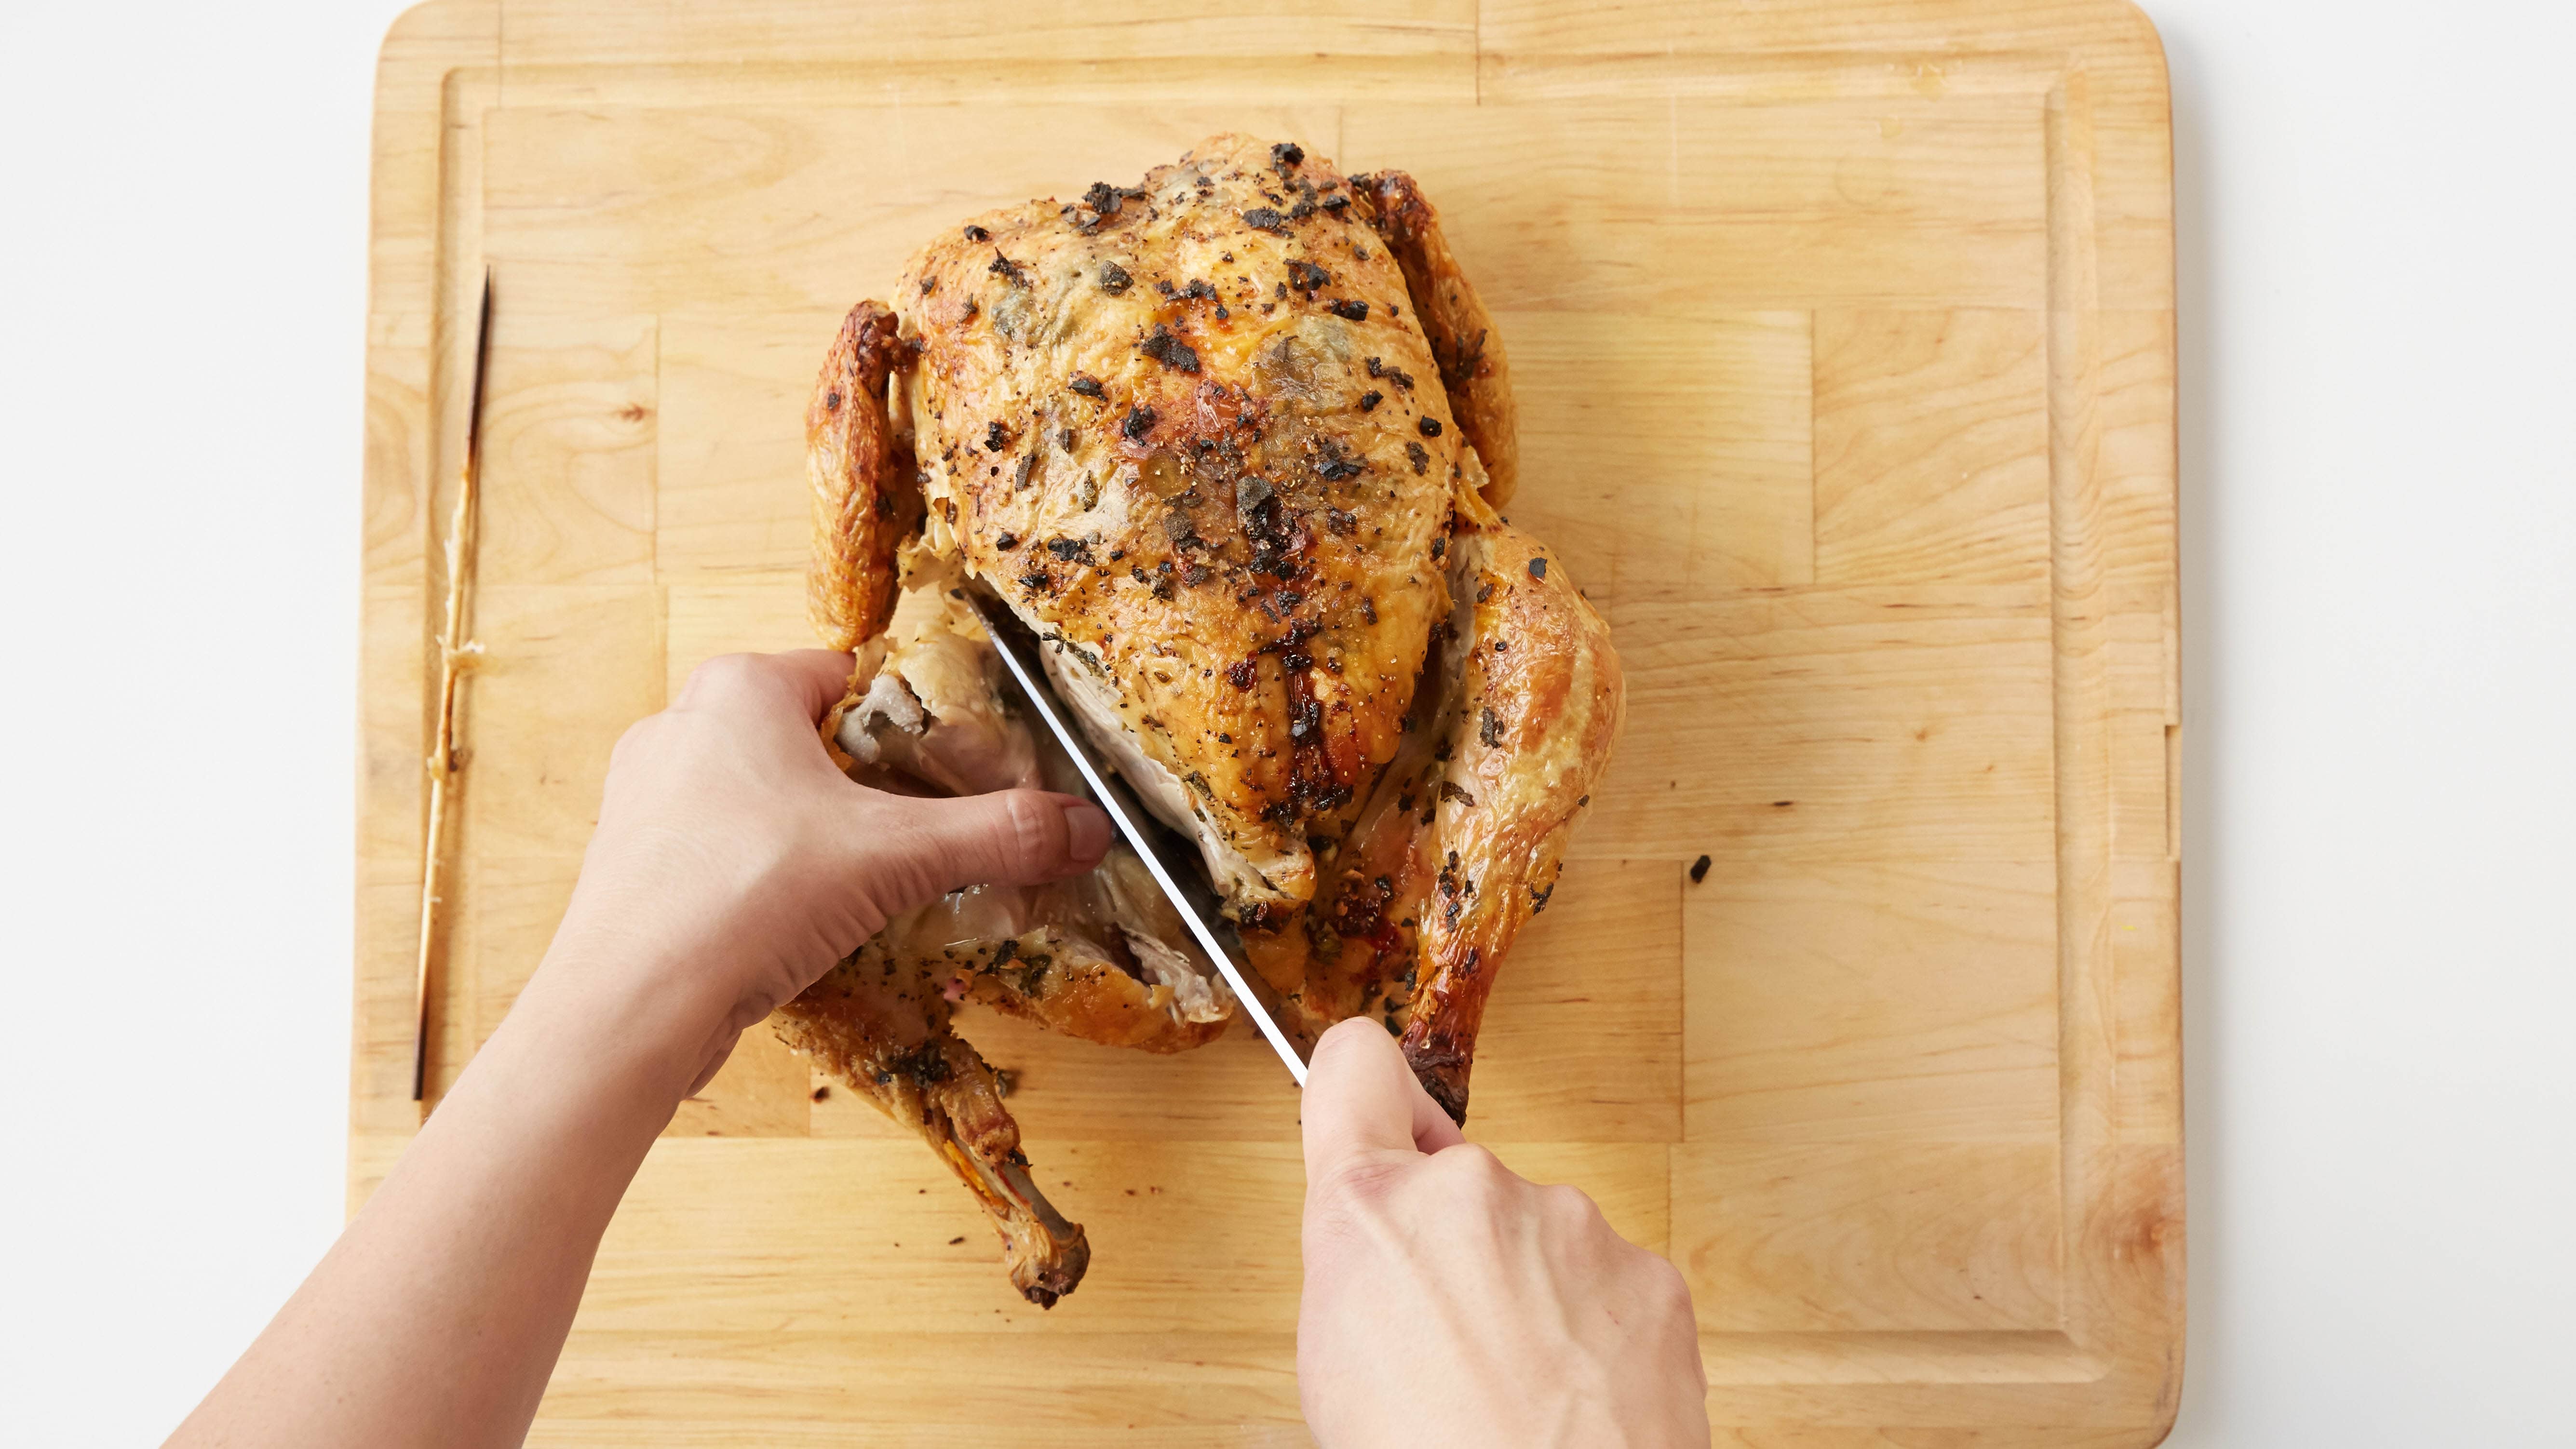 https://www.pillsbury.com/-/media/GMI/Core-Sites/PB/PB/Images/everyday-eats/dinner-tonight/chicken/how-to-carve-a-chicken/how-to-carve-a-chicken_00.jpg